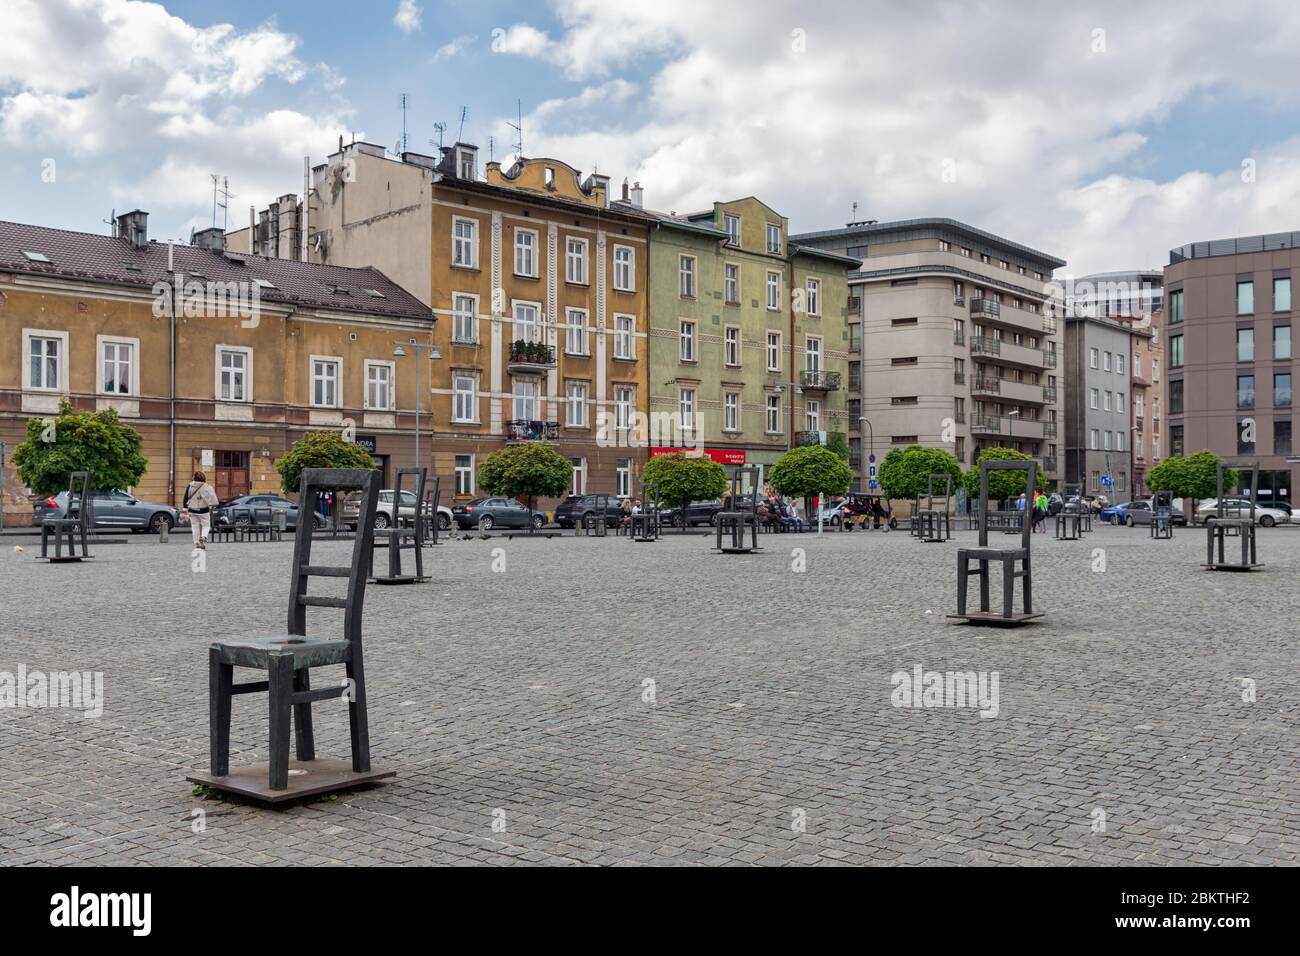 Leere Stühle Denkmal der jüdischen Opfer des 2. Weltkrieges, Krakau, Polen Stockfoto